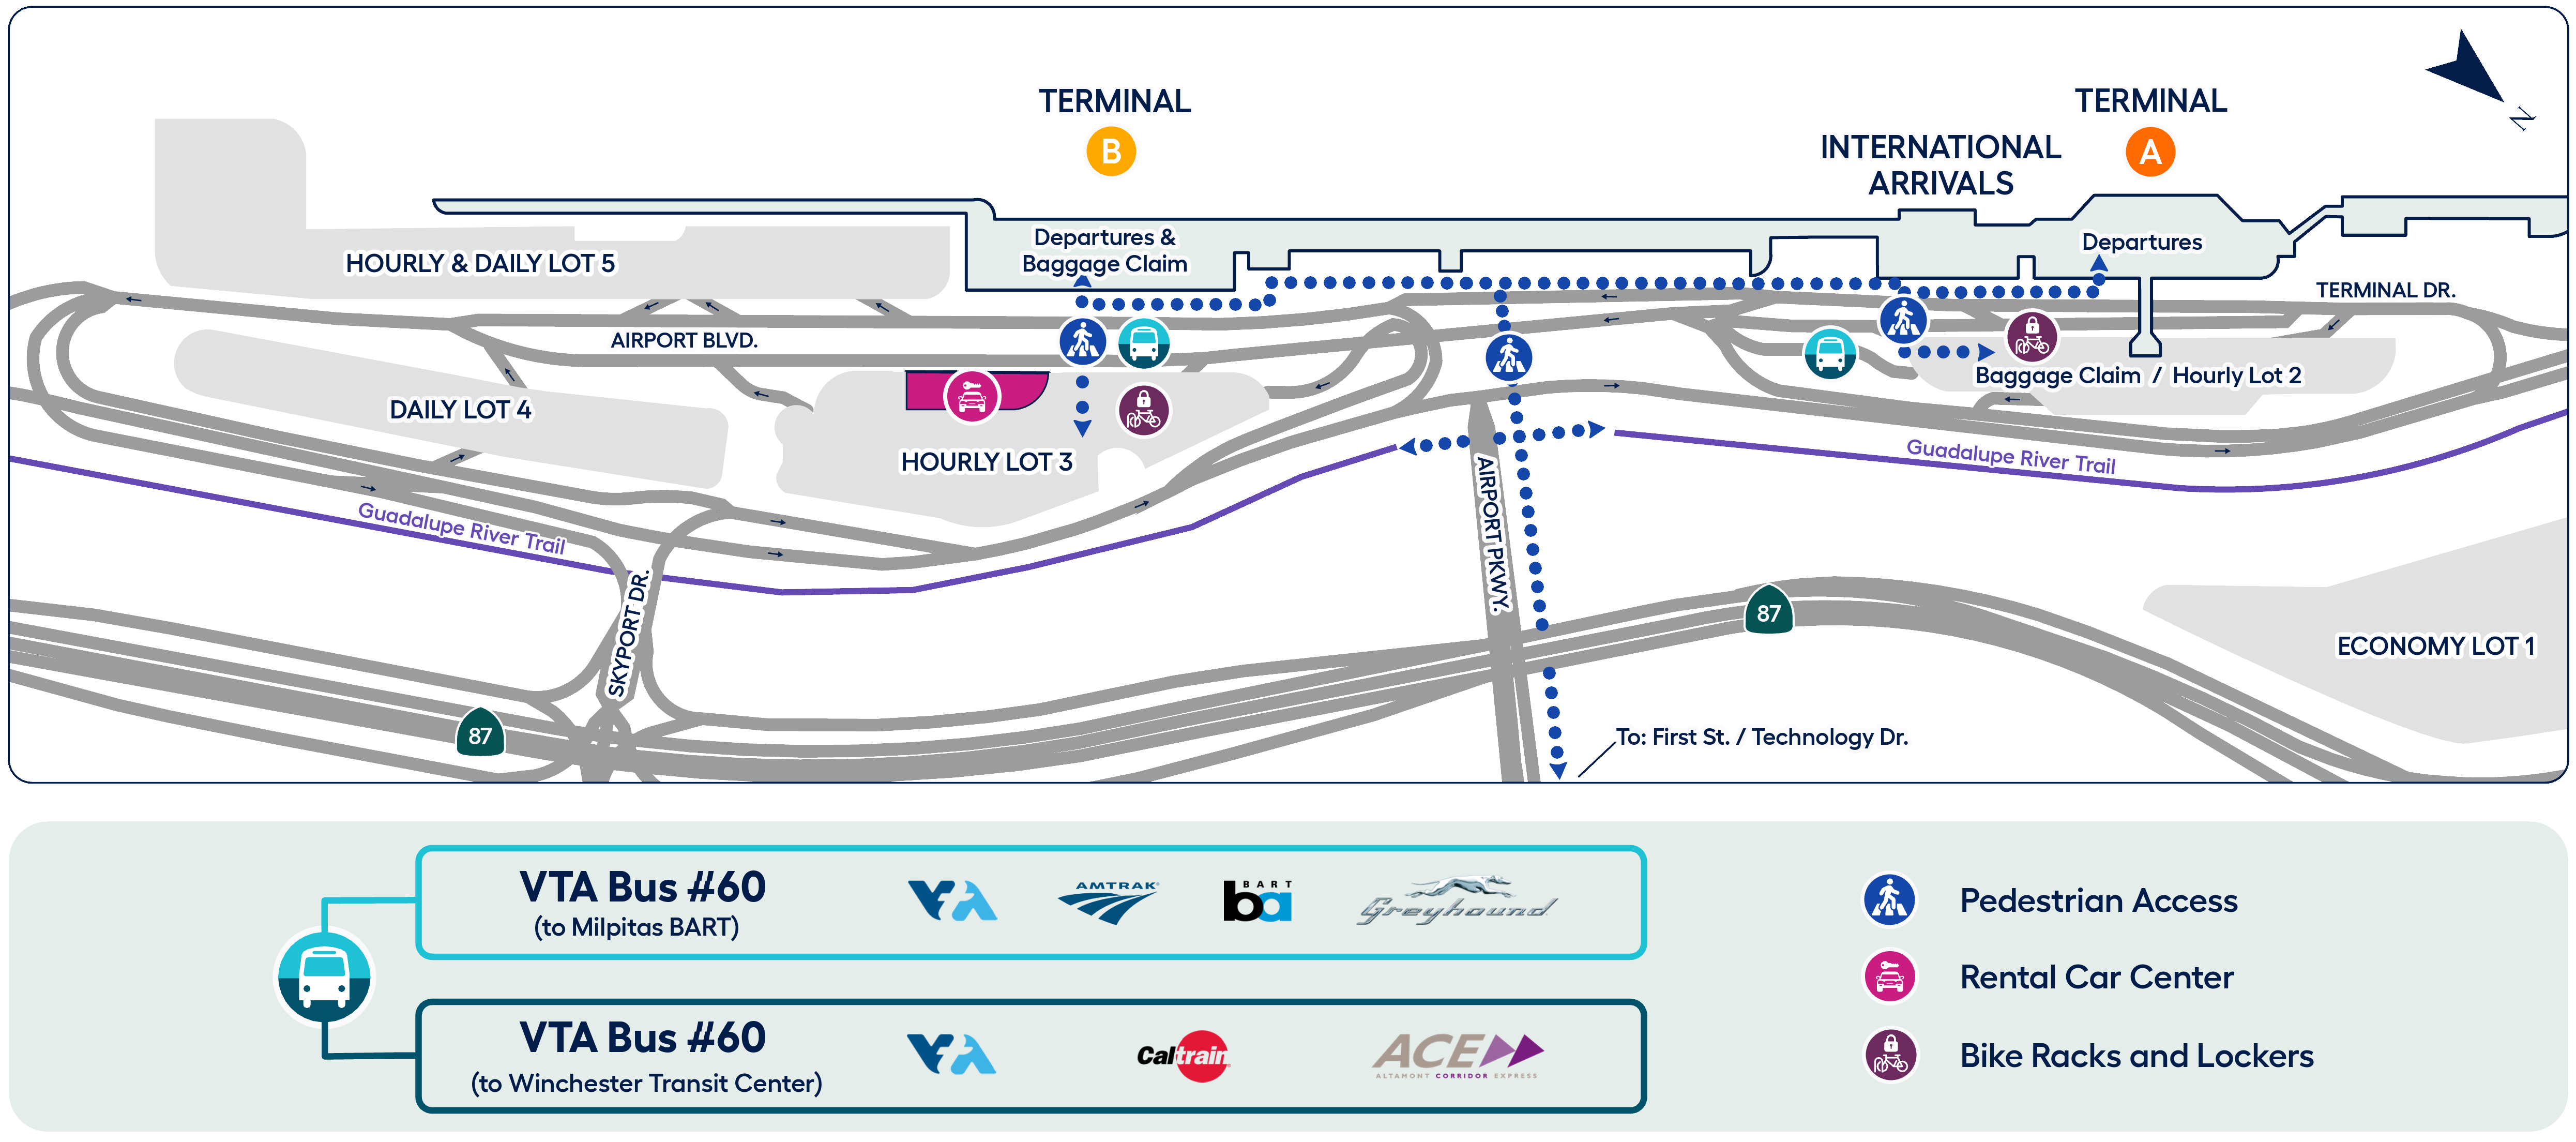 Public Transit & Pedestrian Access Map